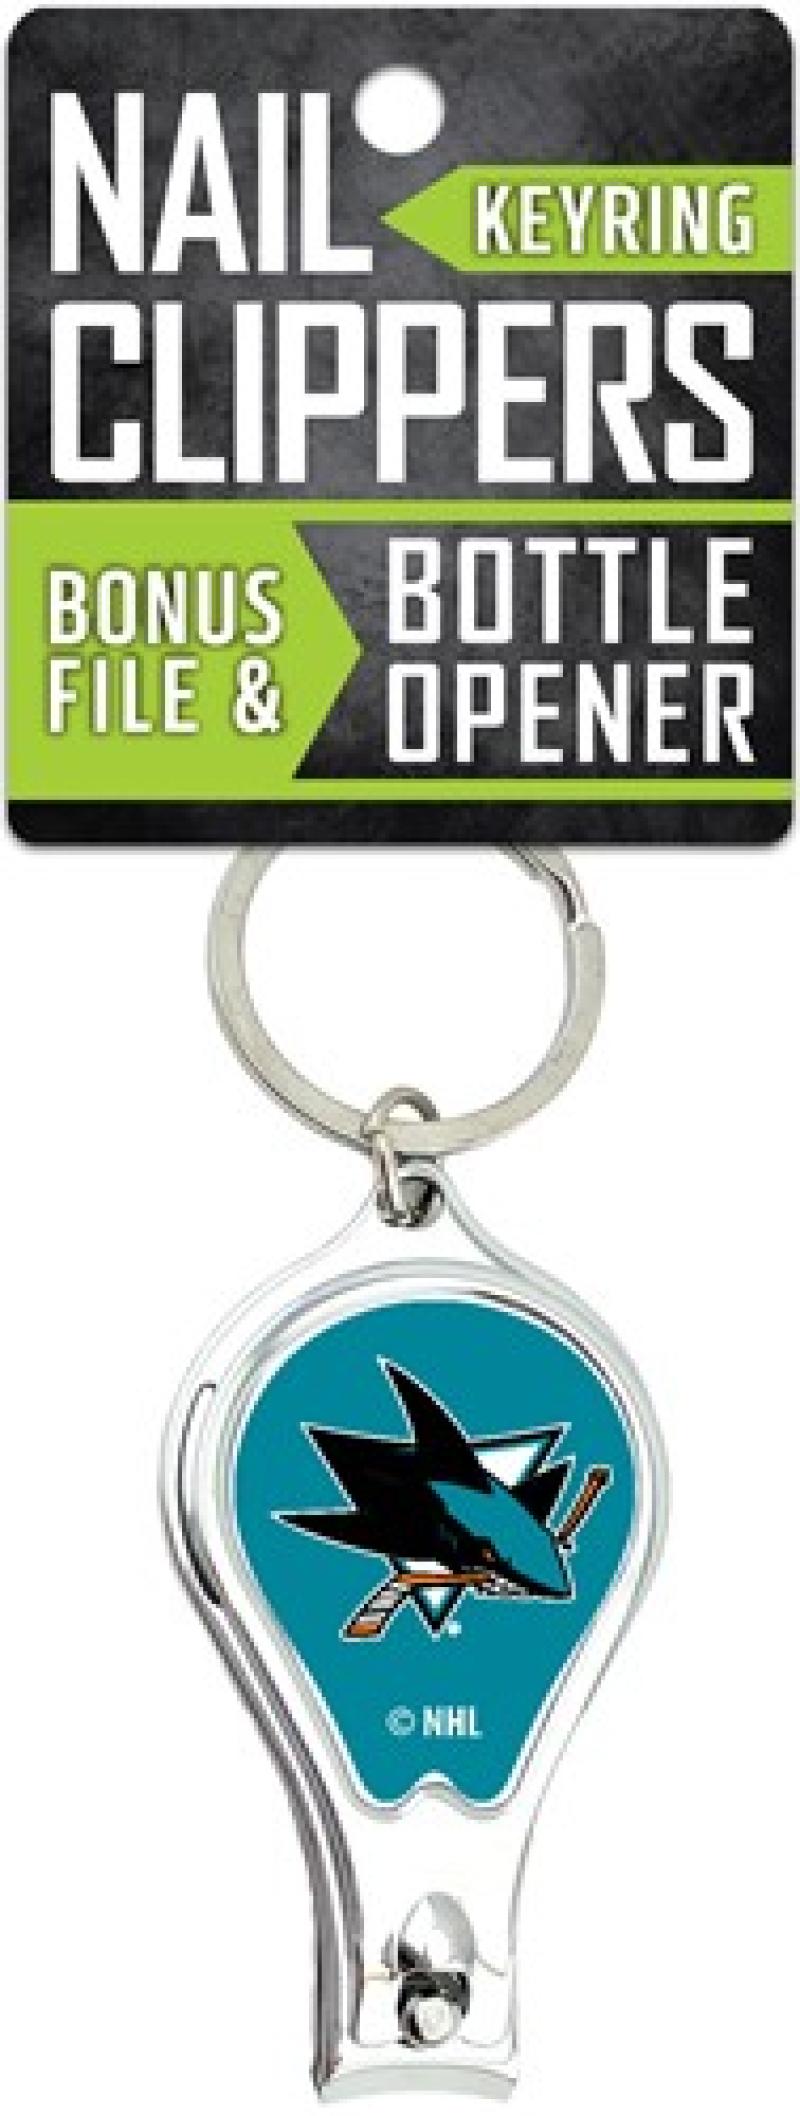 San Jose Sharks Nail Clipper Keyring w/Bonus File & Bottle Opener Image 1